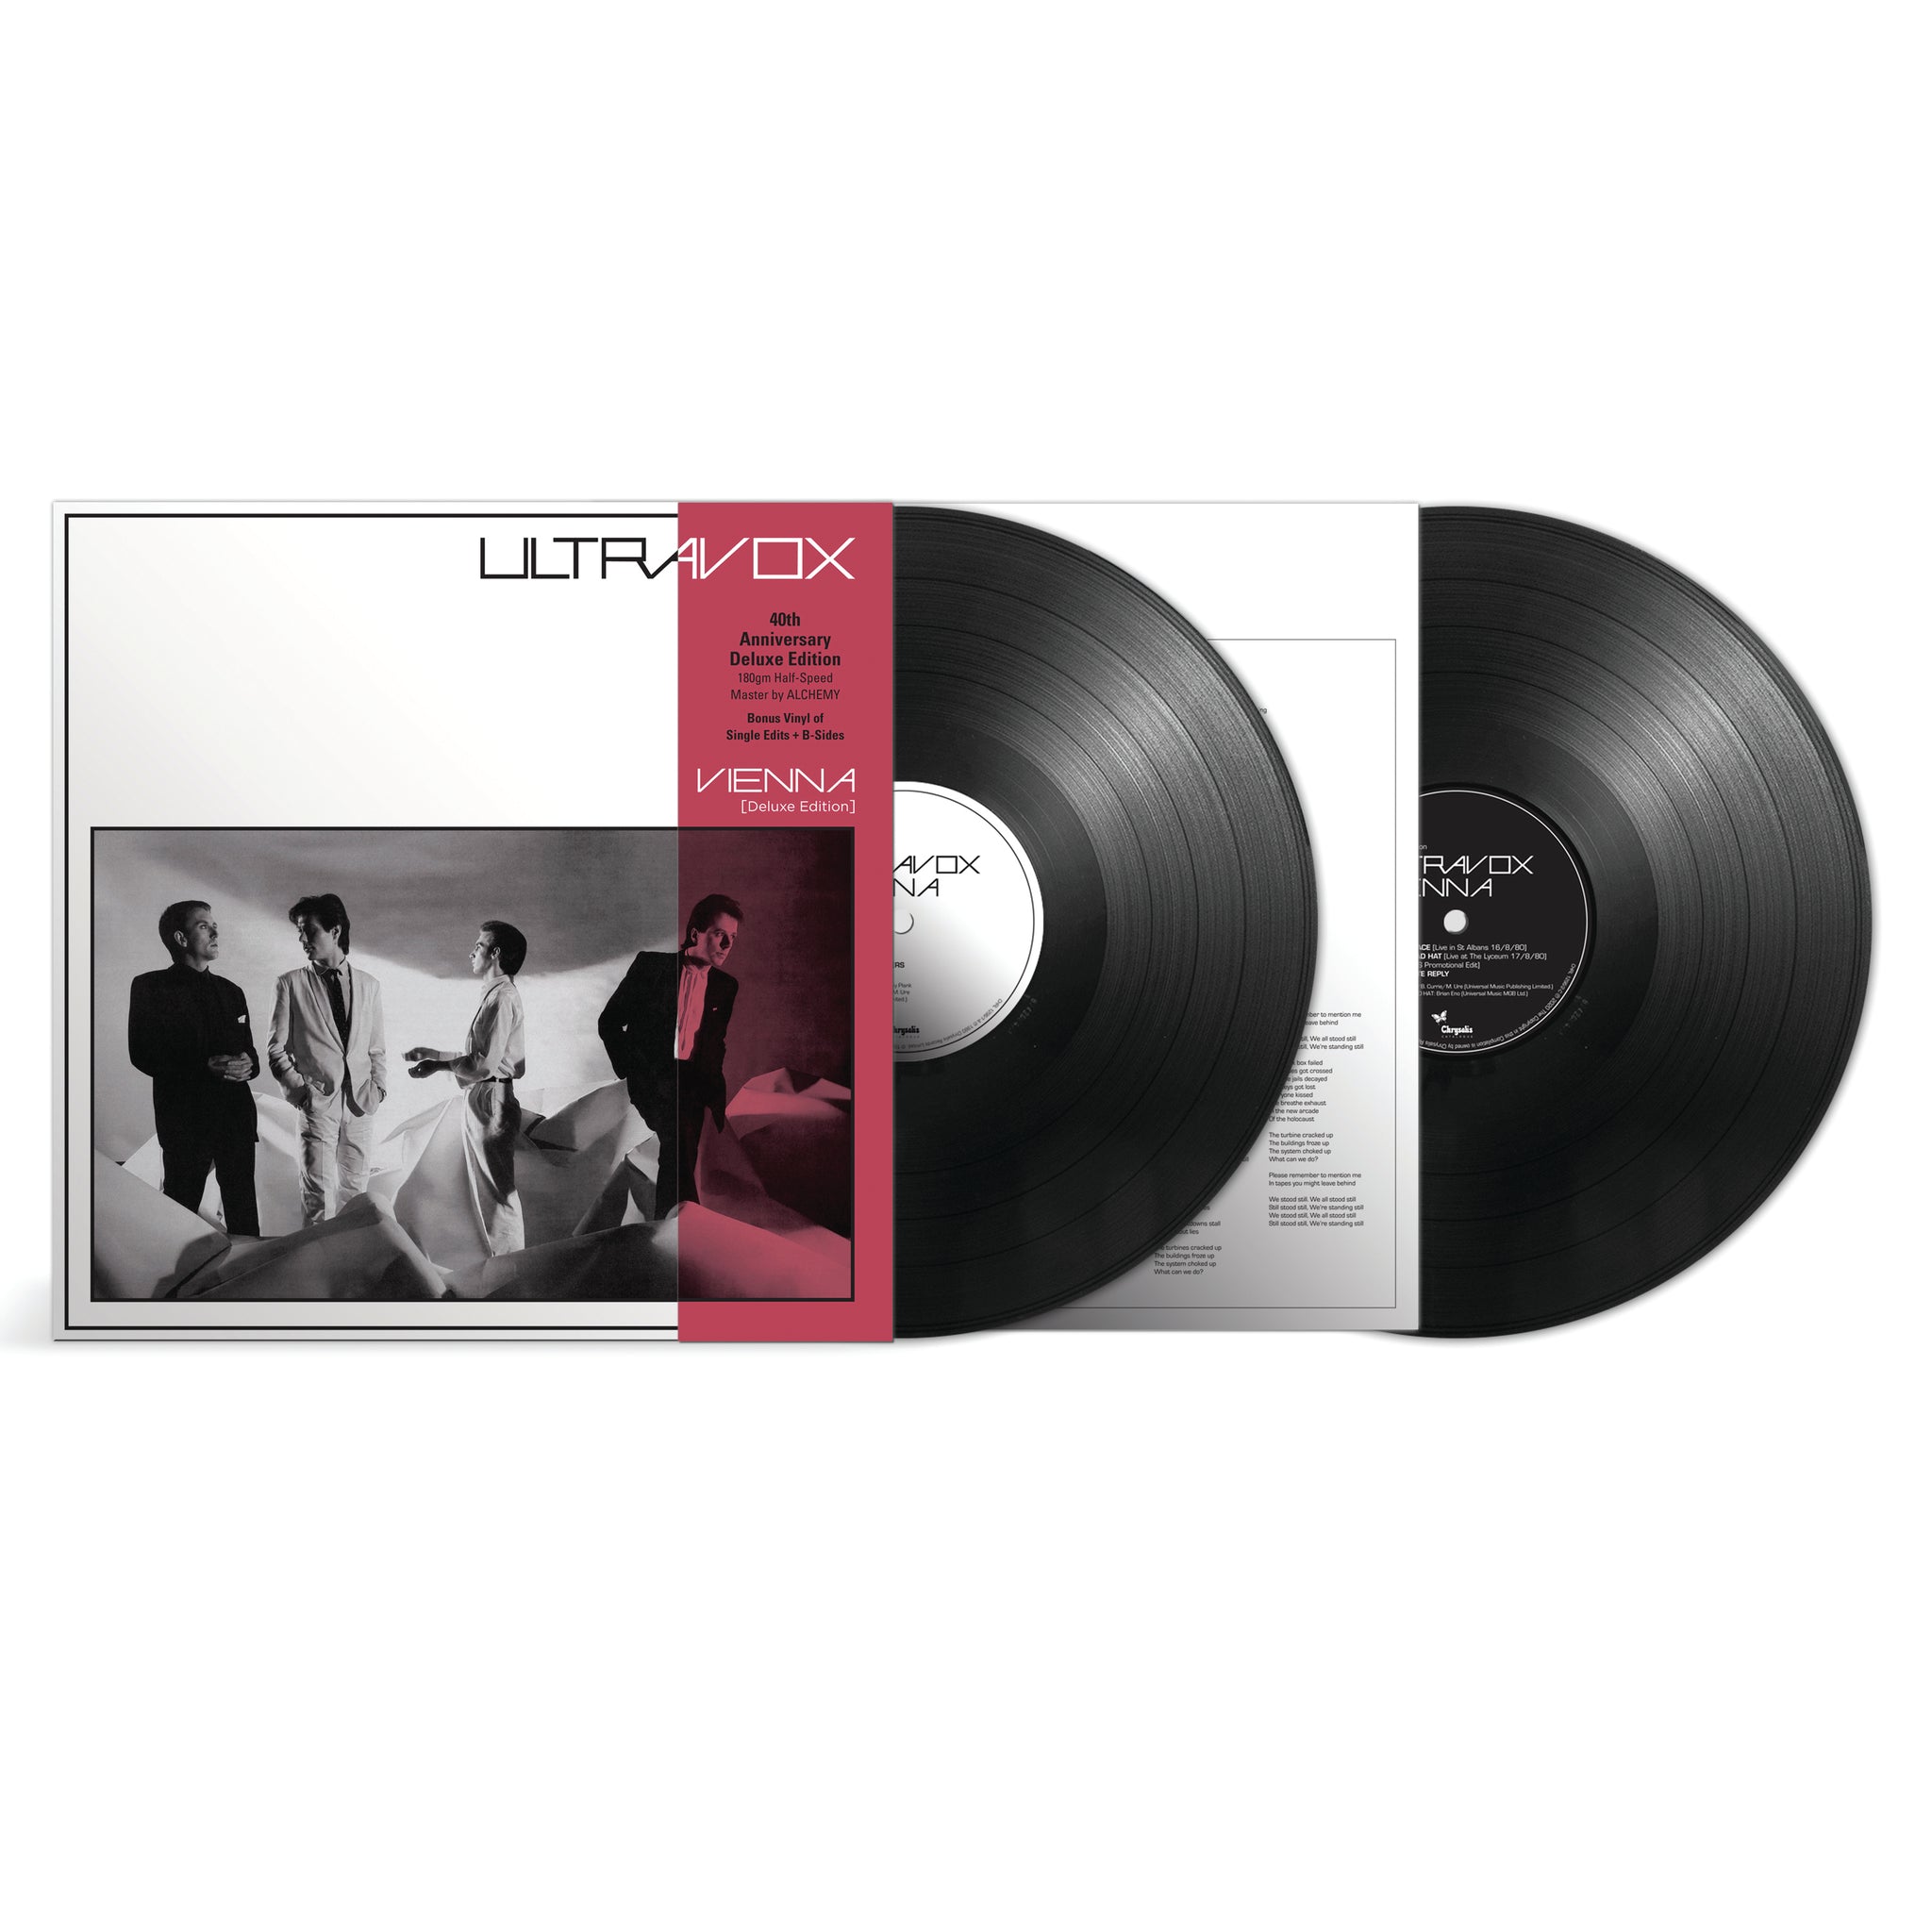 Ultravox - Vienna: 40th Anniversary (2LP Deluxe Edition)